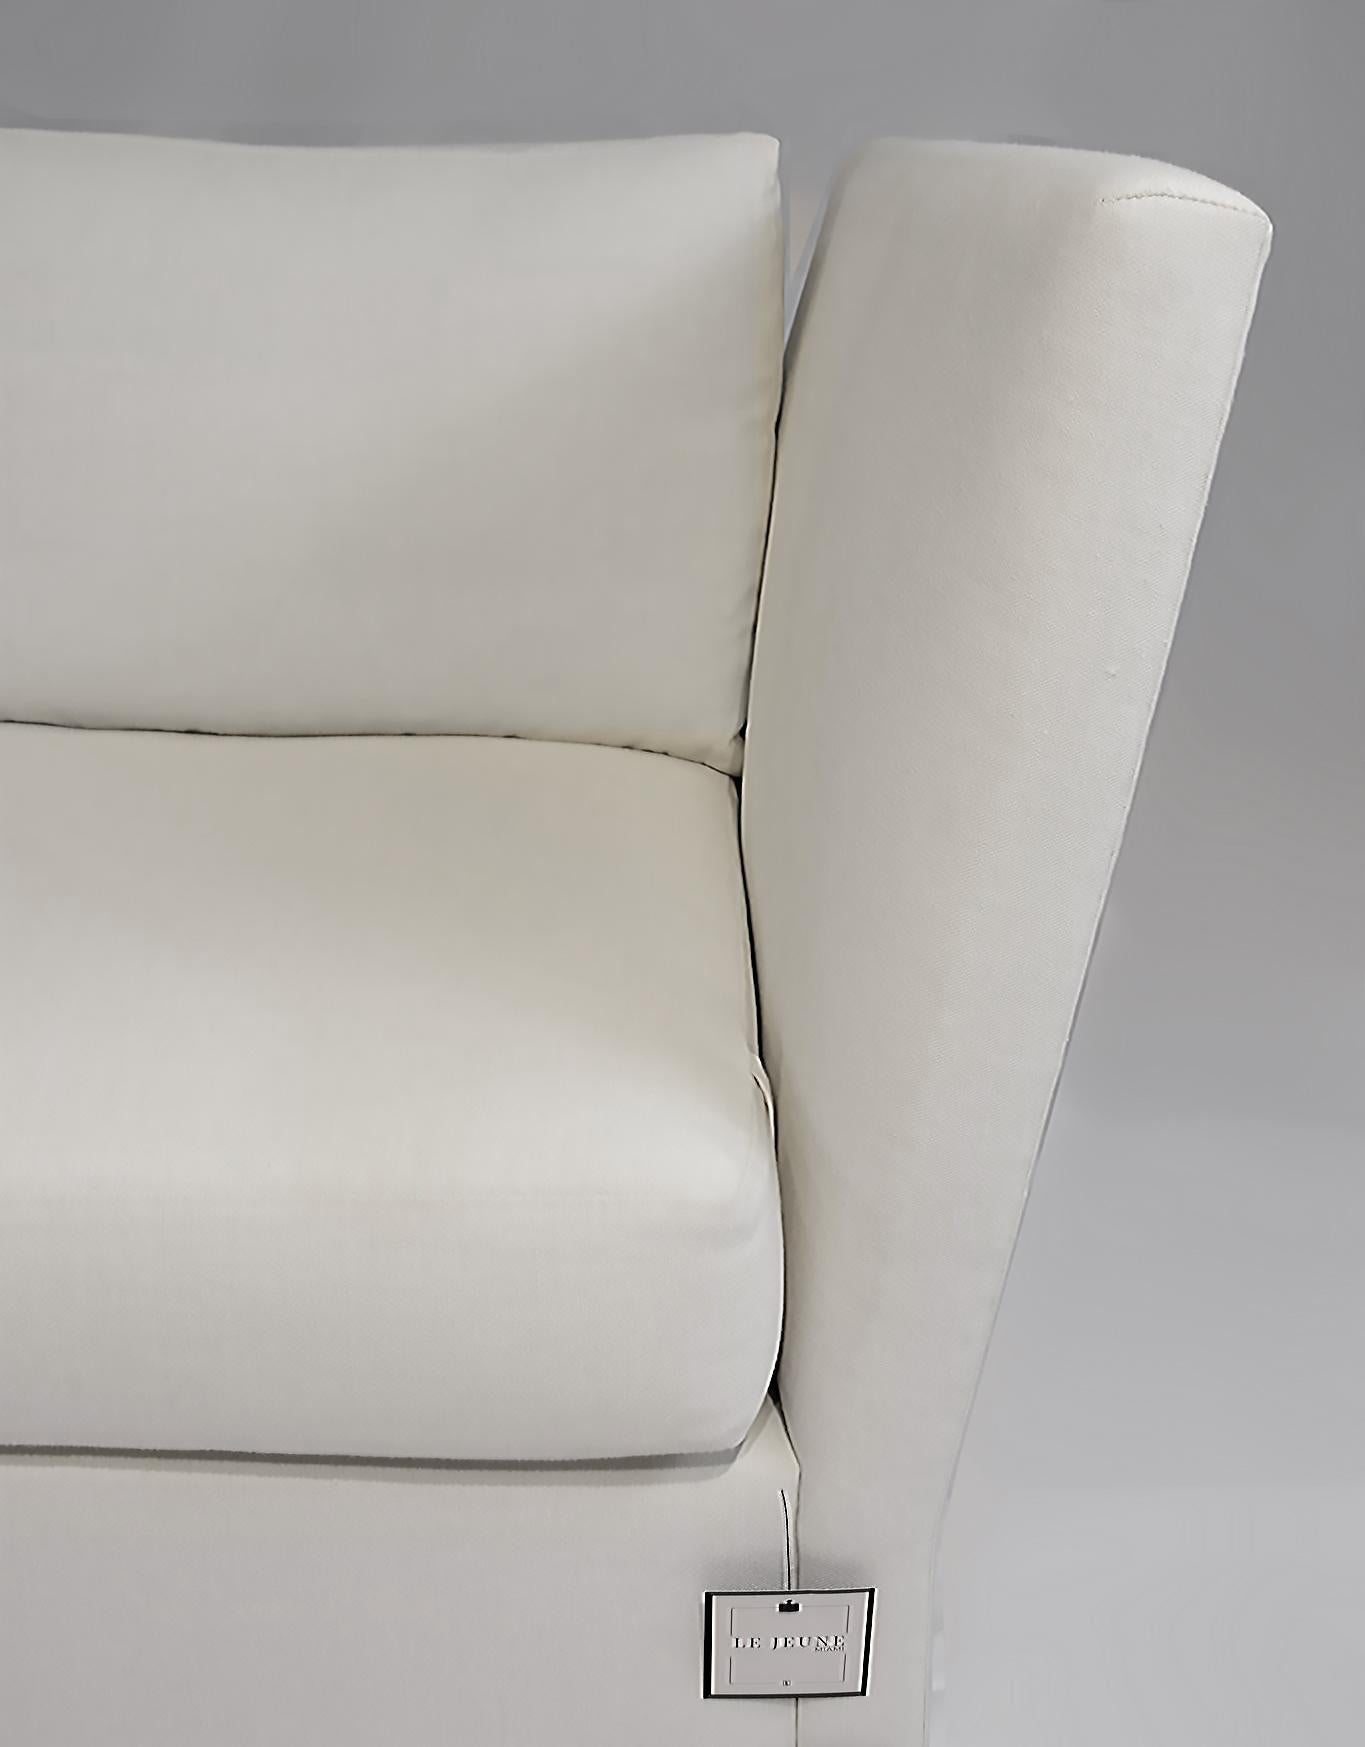 Contemporary Le Jeune Upholstery Jones Angled Arm Sofa Showroom Model For Sale